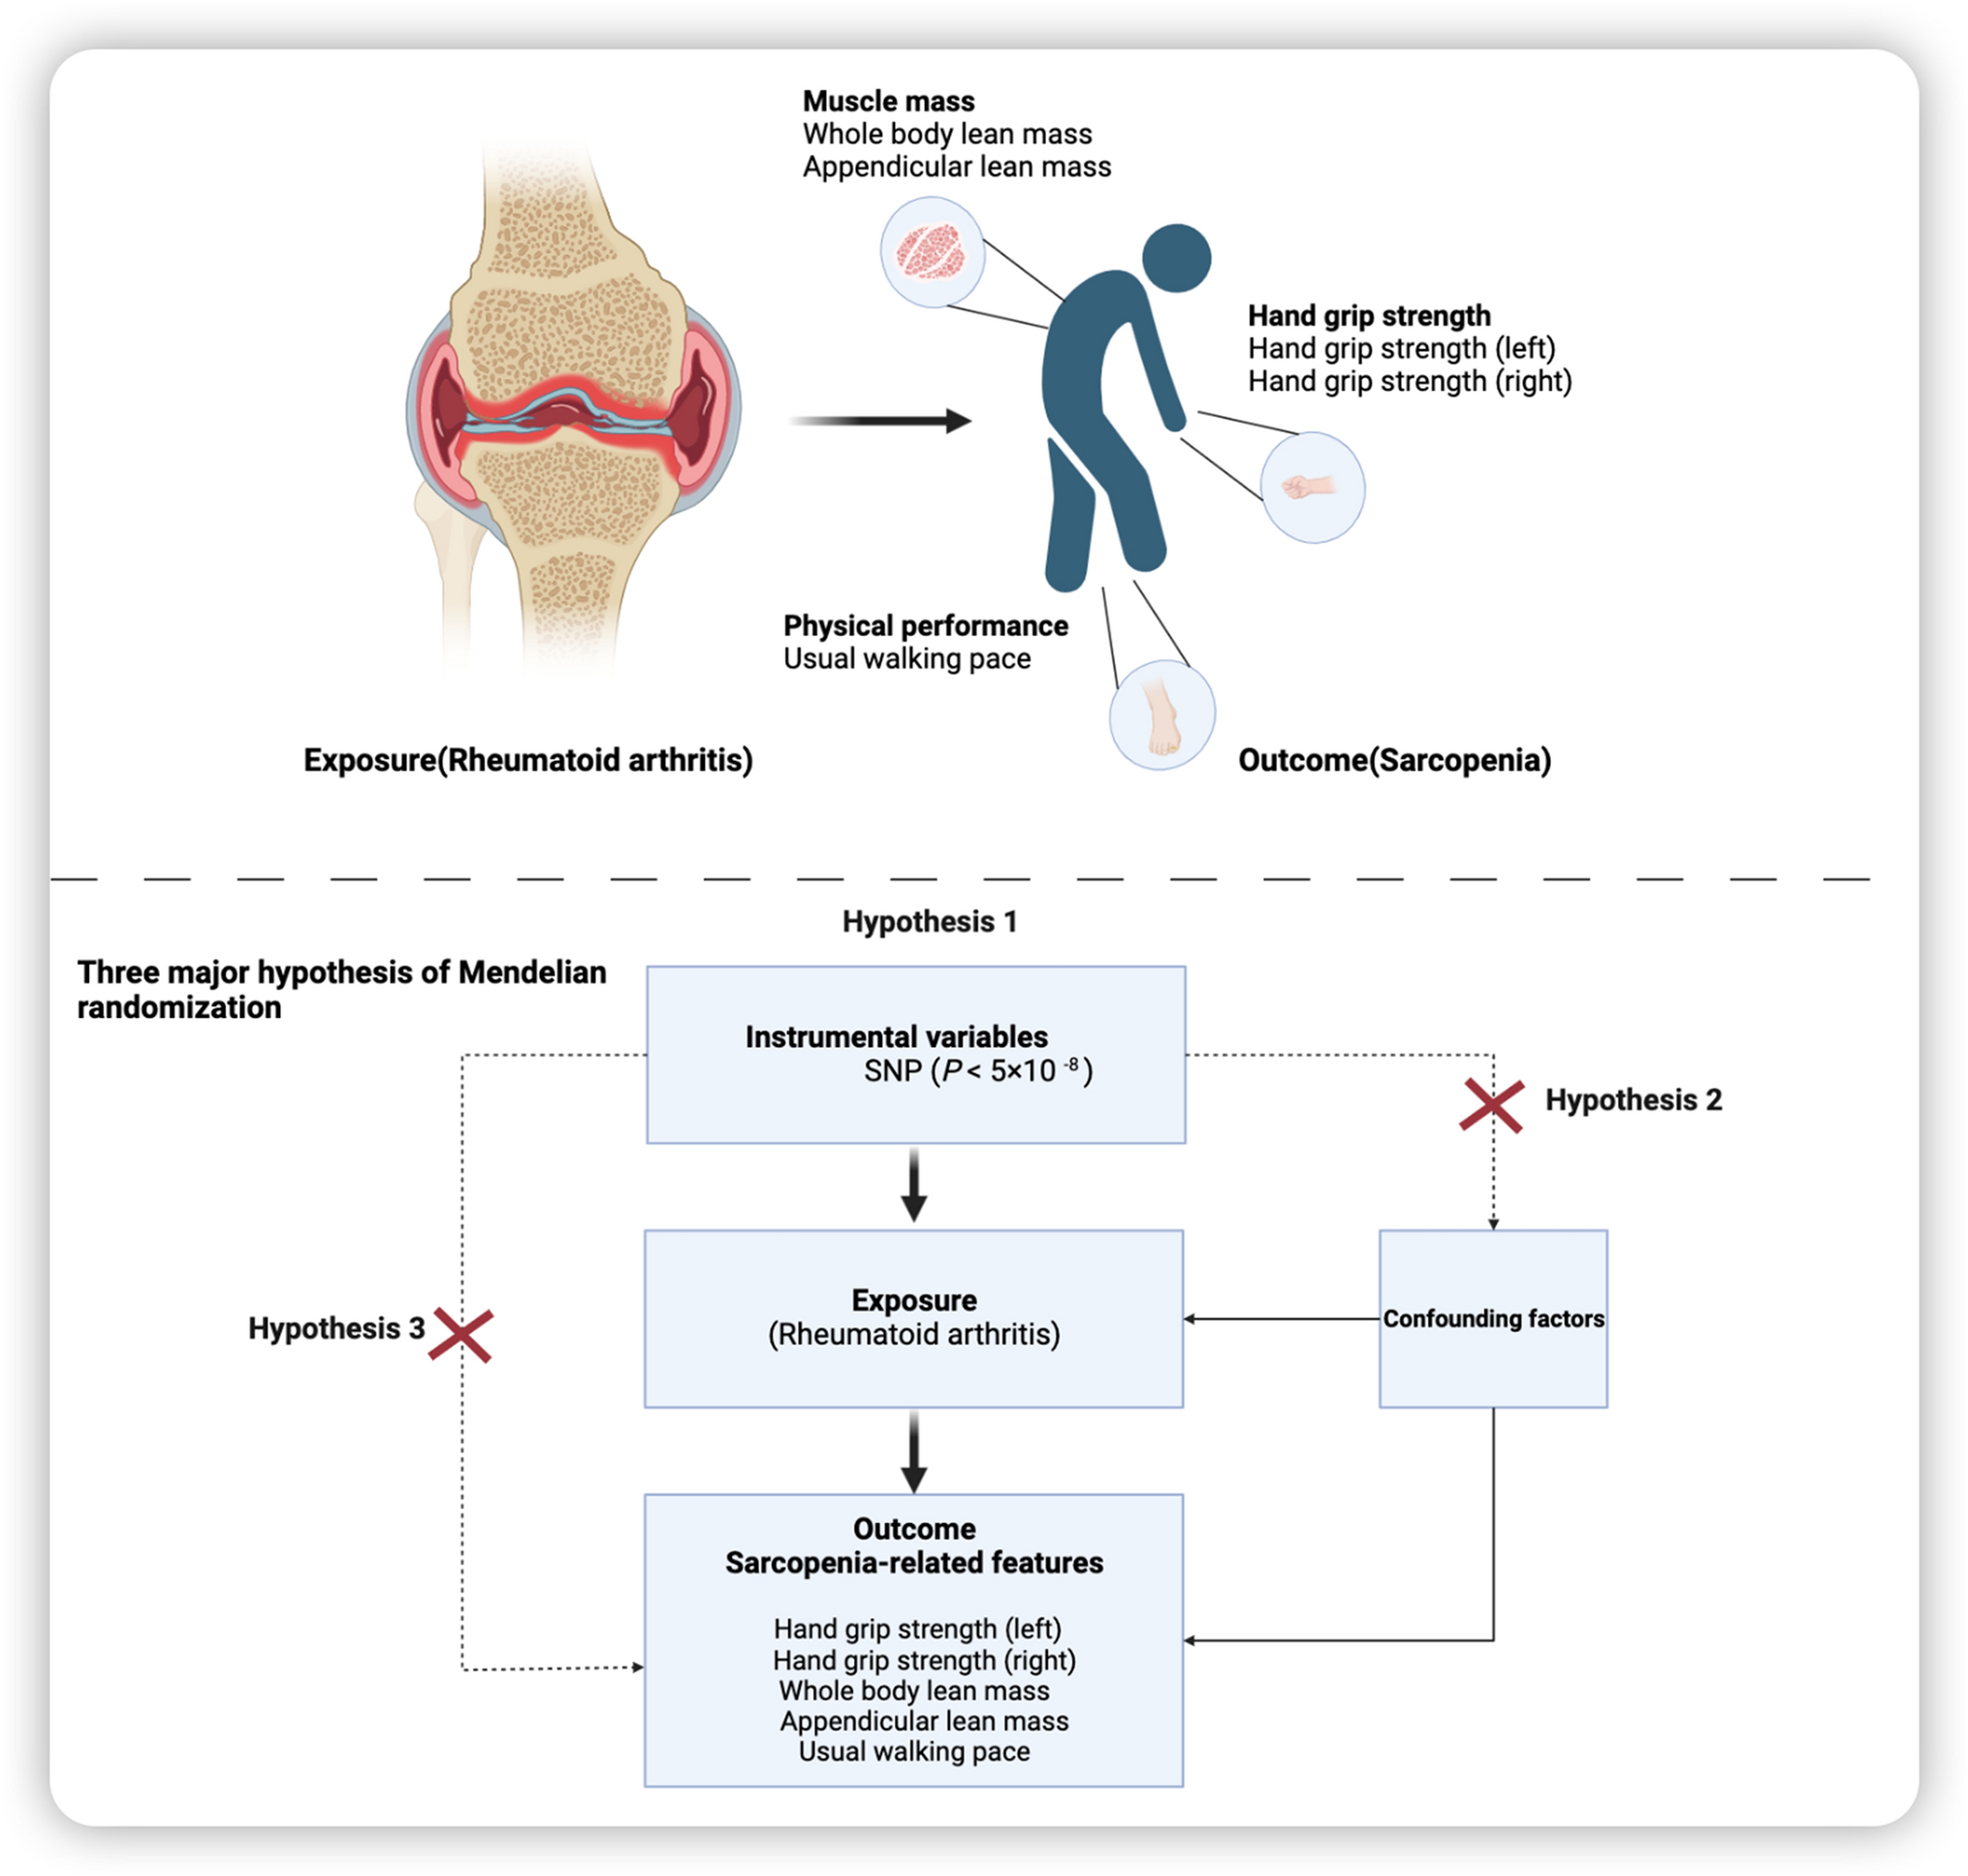 The Effect of Rheumatoid Arthritis on Features Associated with Sarcopenia: A Mendelian Randomization Study